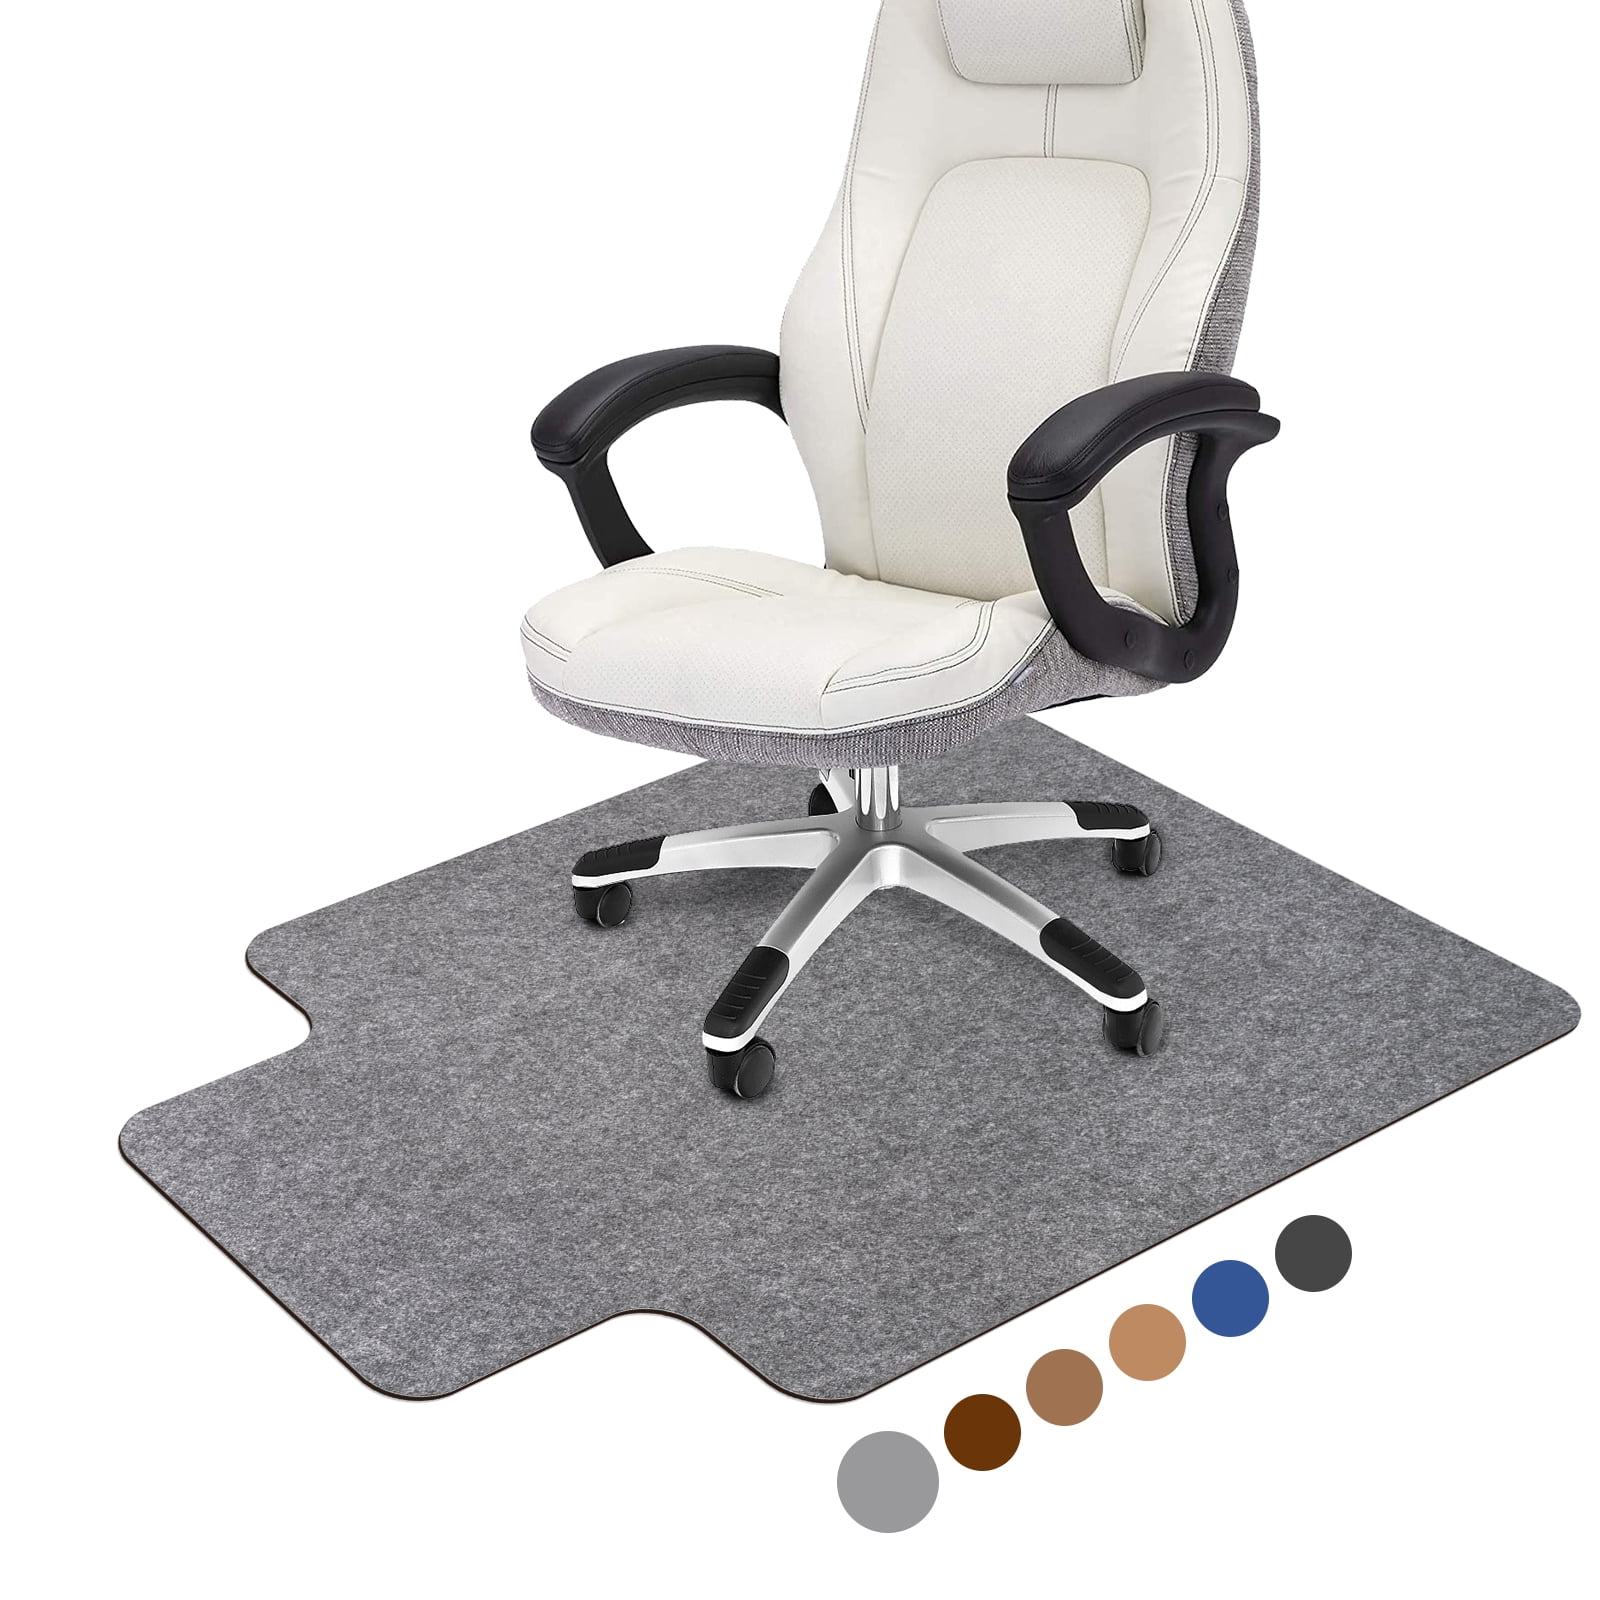 RUGged Chair Mats are Woven Fabric Surface Desk Chair Mats by American Floor  Mats